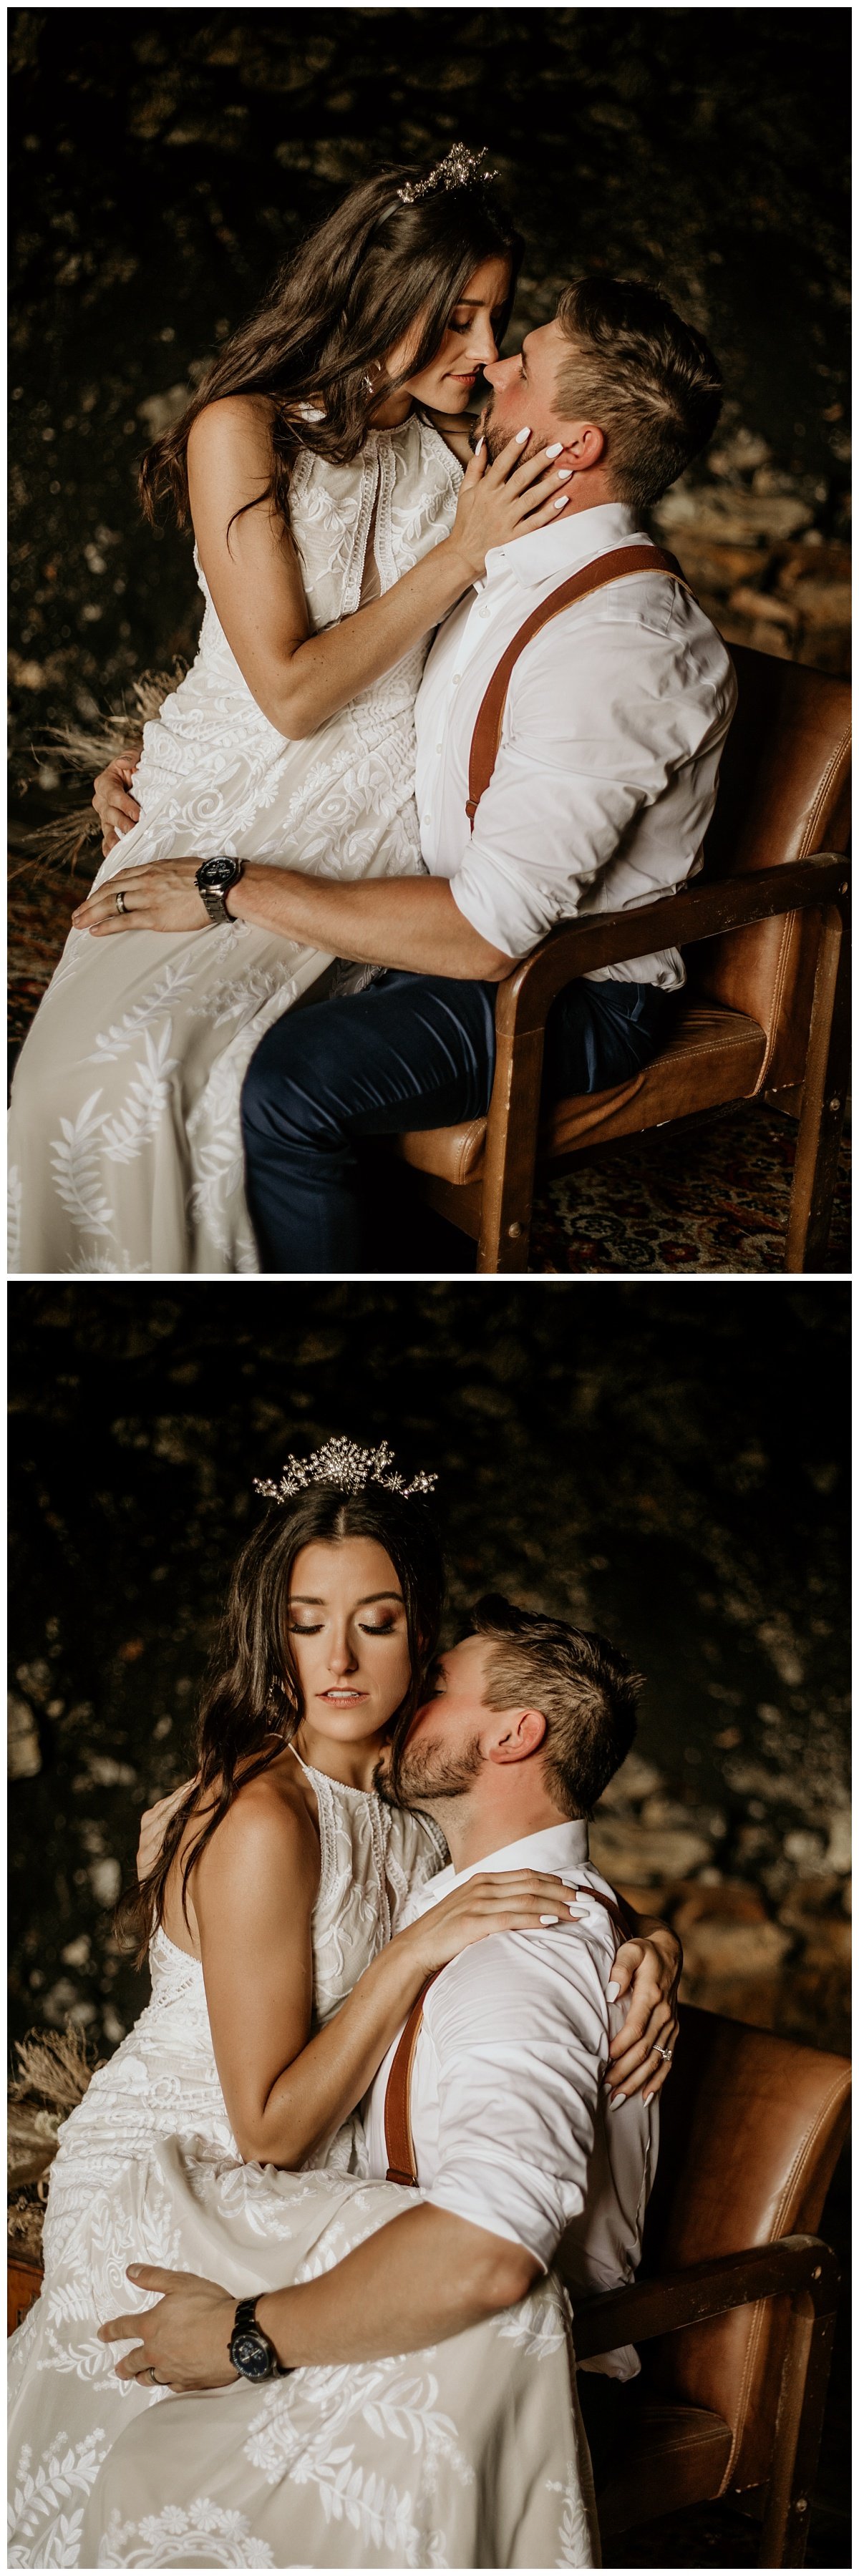 Boho+Elopement+_+Kansas+City+Wedding+Photography+_+Colorado+Elopement+_+Outdoor+Wedding+_+Outdoor+Elopement+Photos (7).jpeg